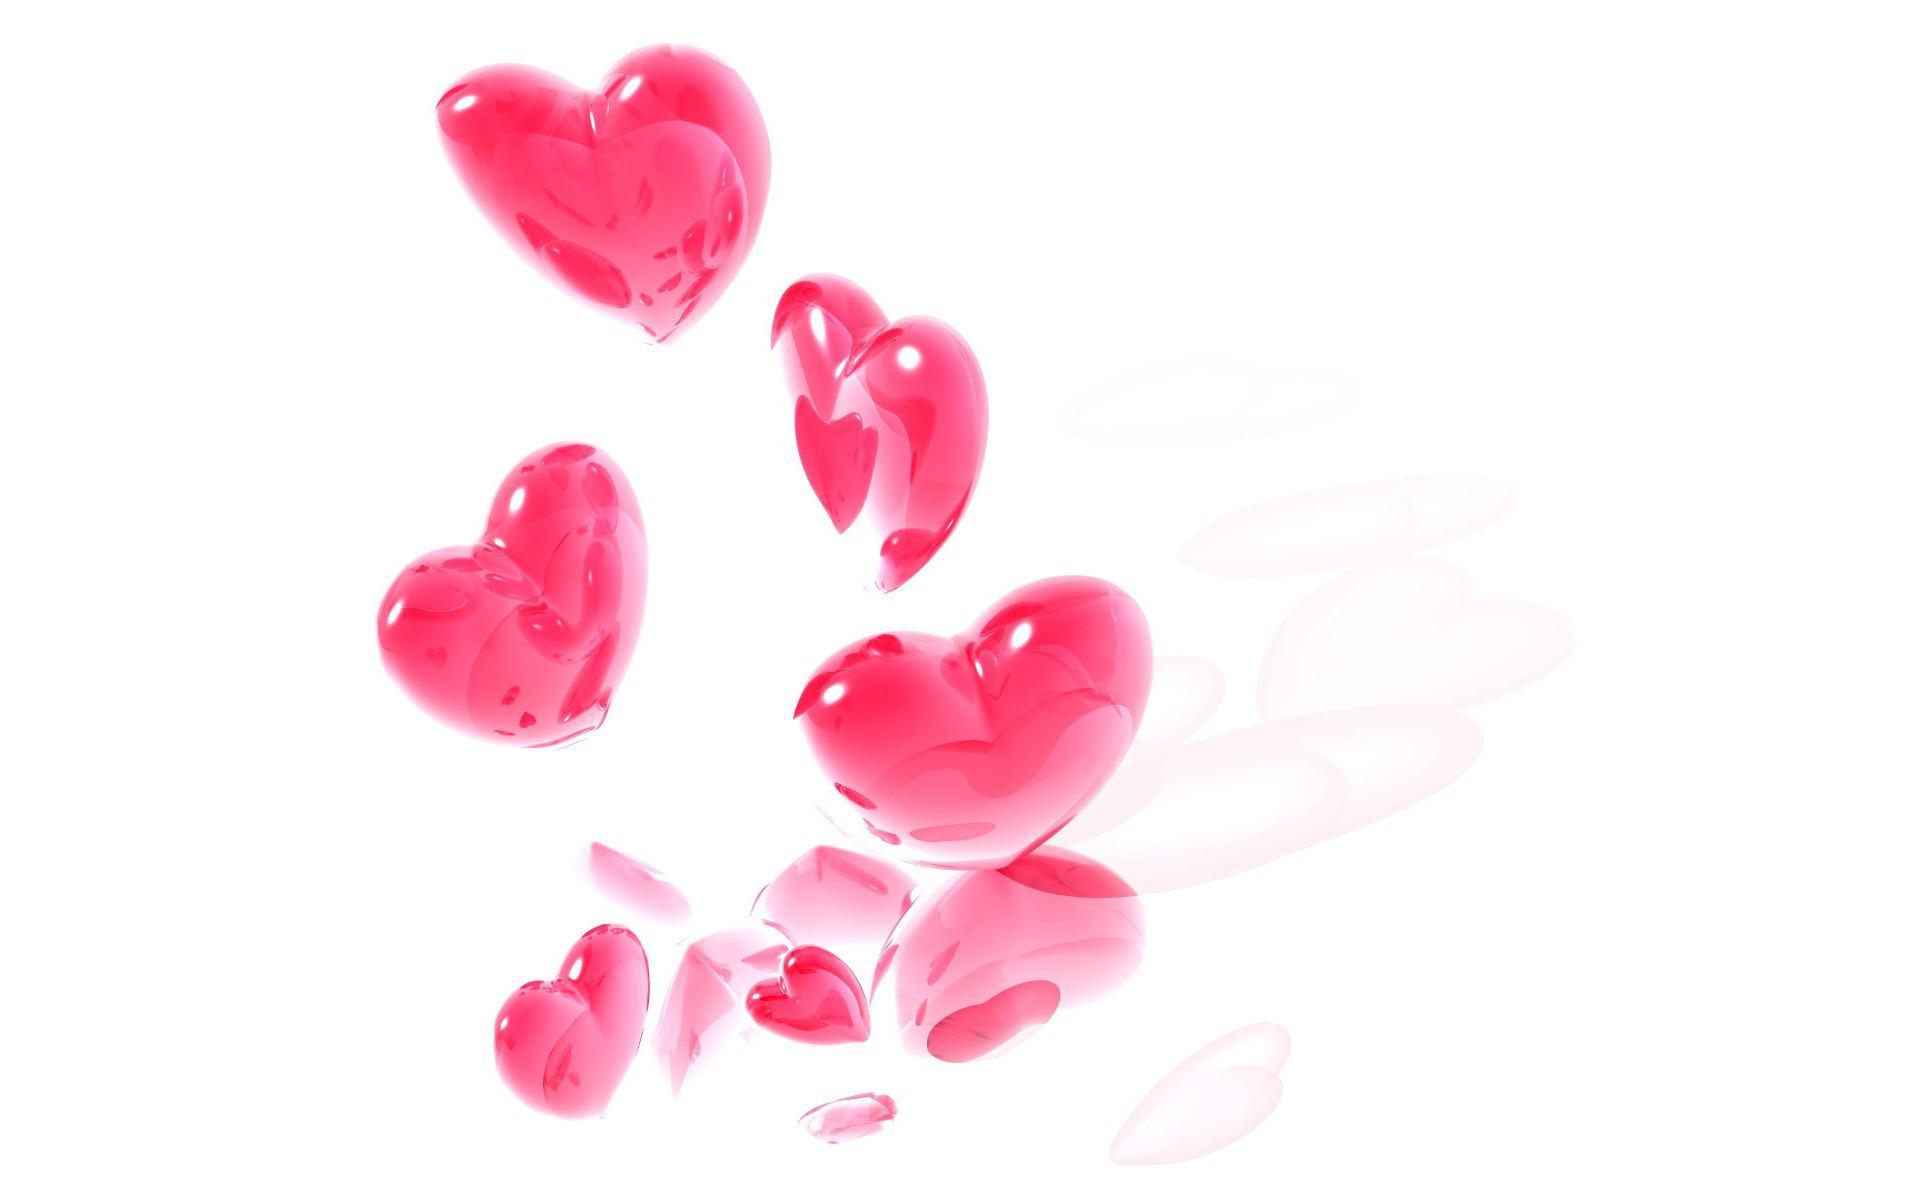 Wallpaper minimalism white background pink heart hearts love roma